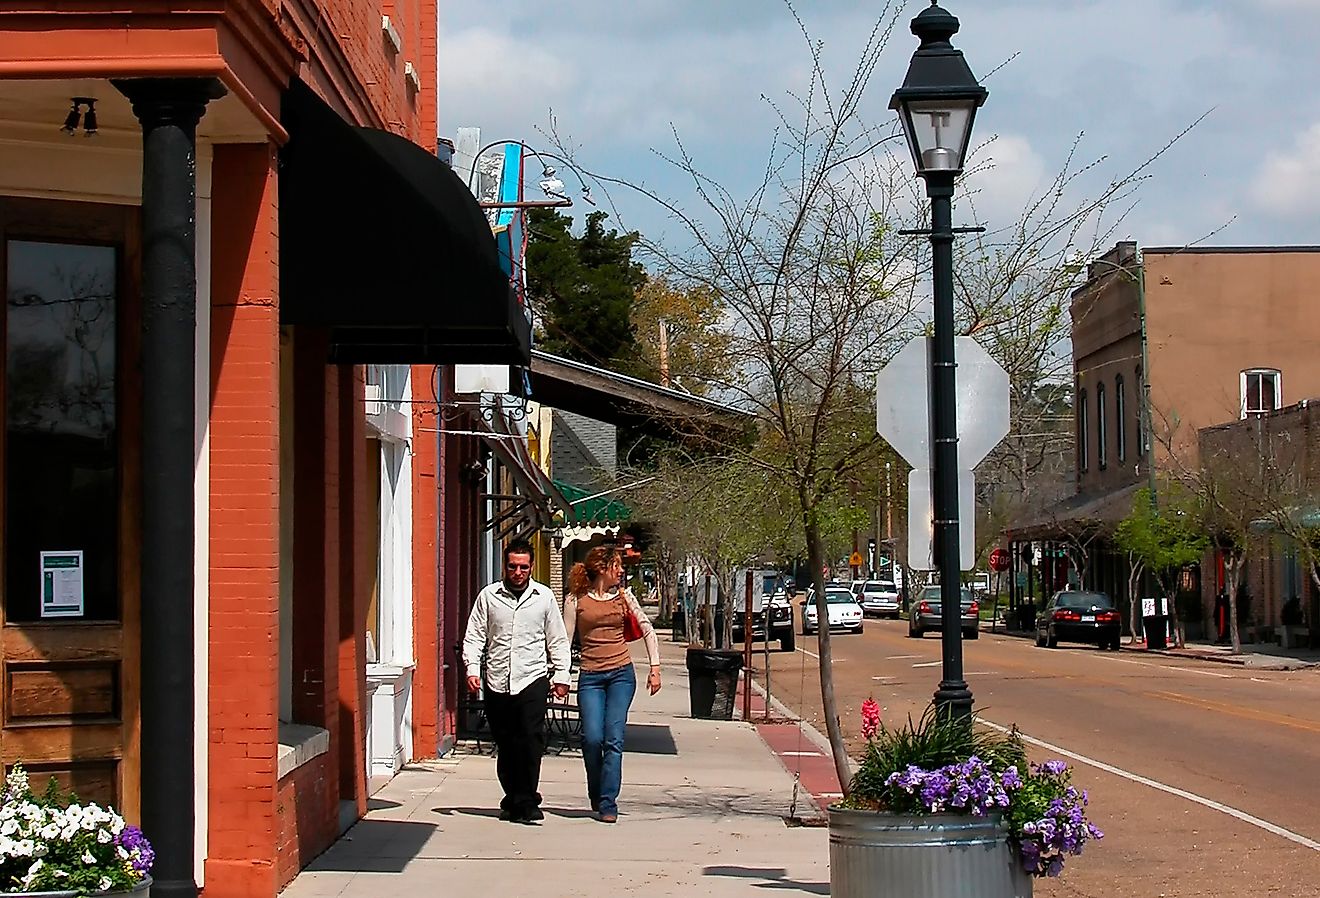 Downtown street in Covington, Louisiana. Image credit Malachi Jacobs via Shutterstock